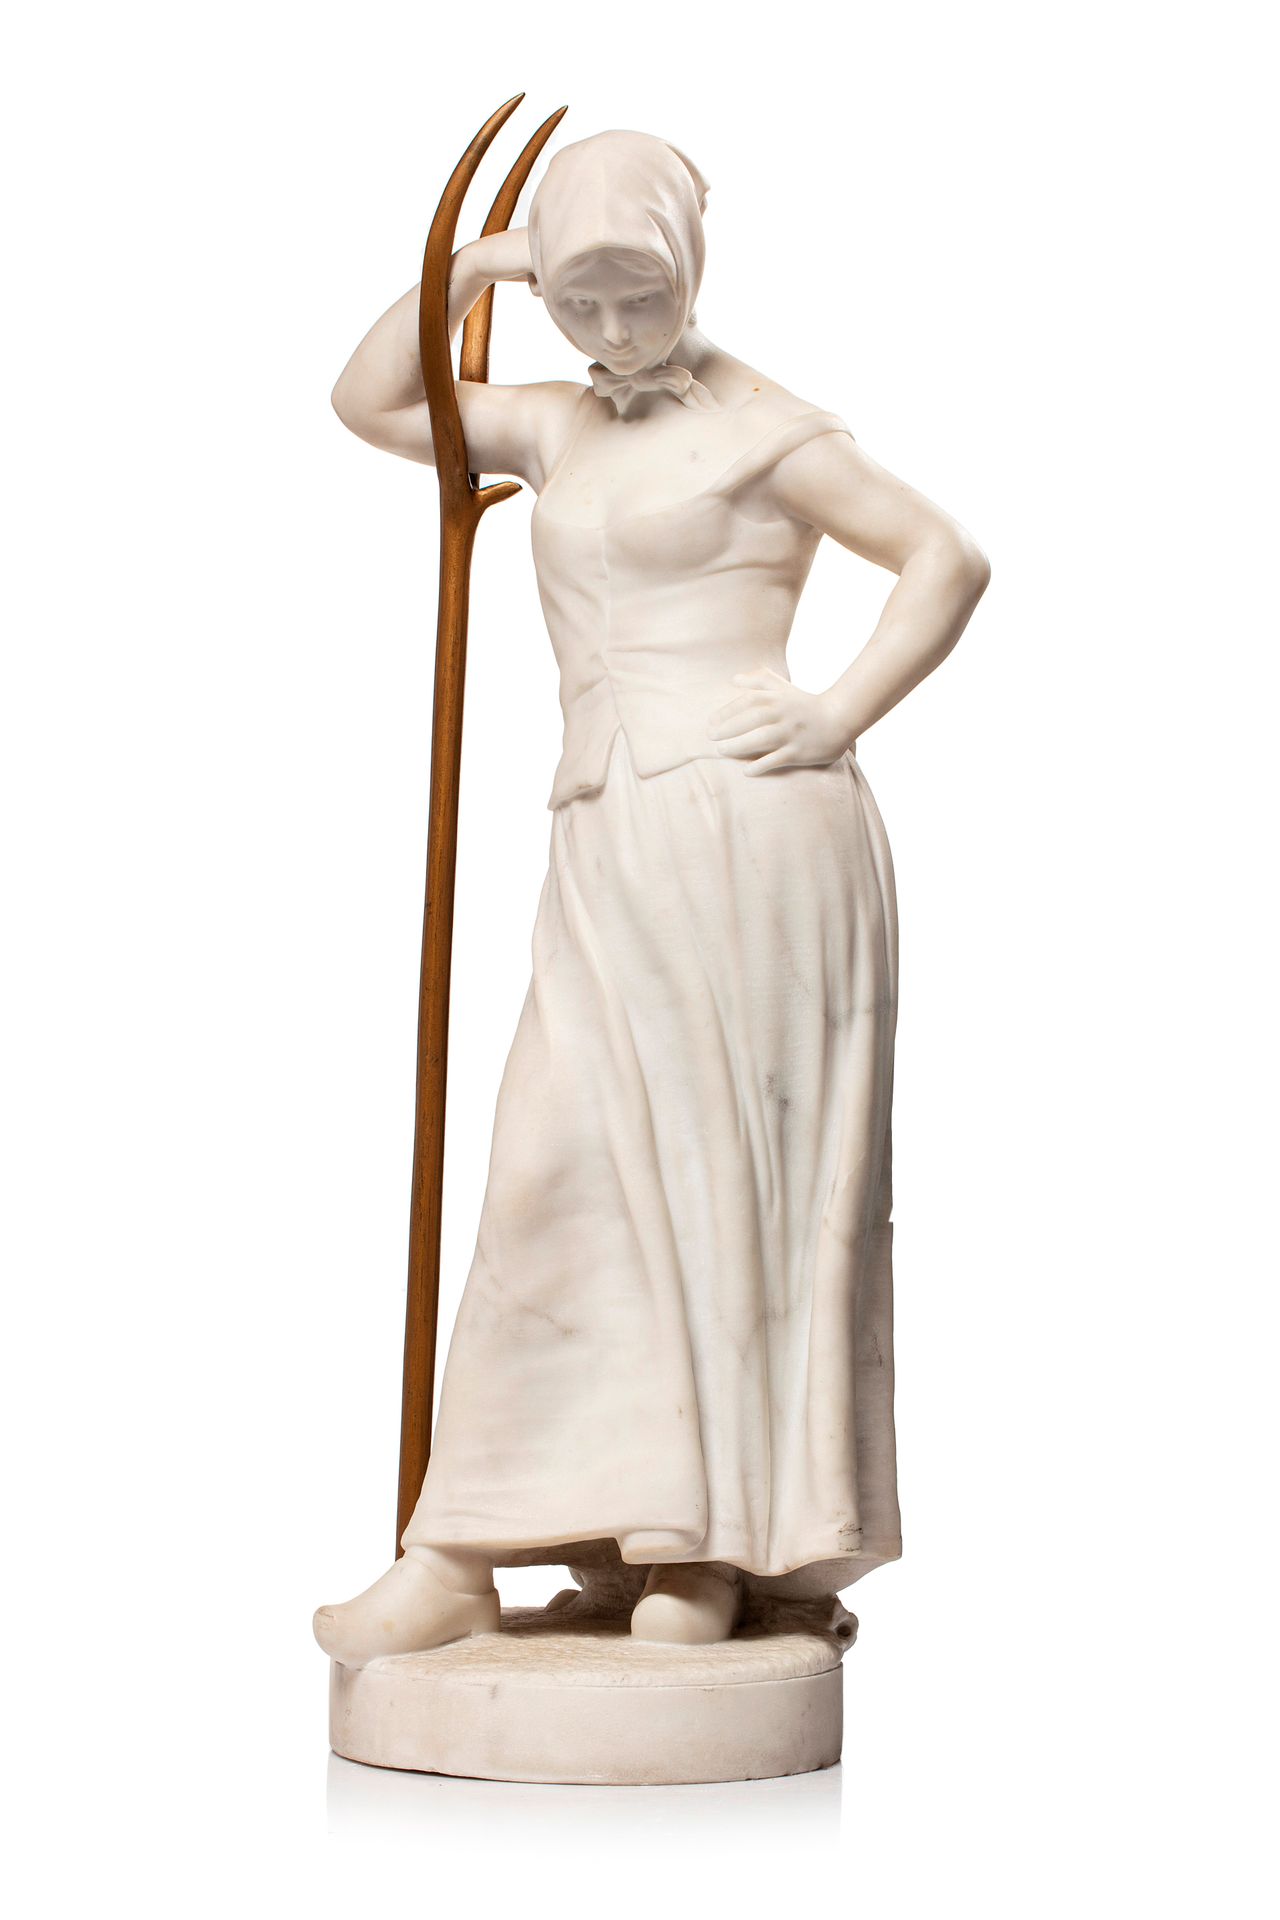 Null Alfred BOUCHER (1850 -1934)

The Tinewoman

Carrara white sculpture of a yo&hellip;